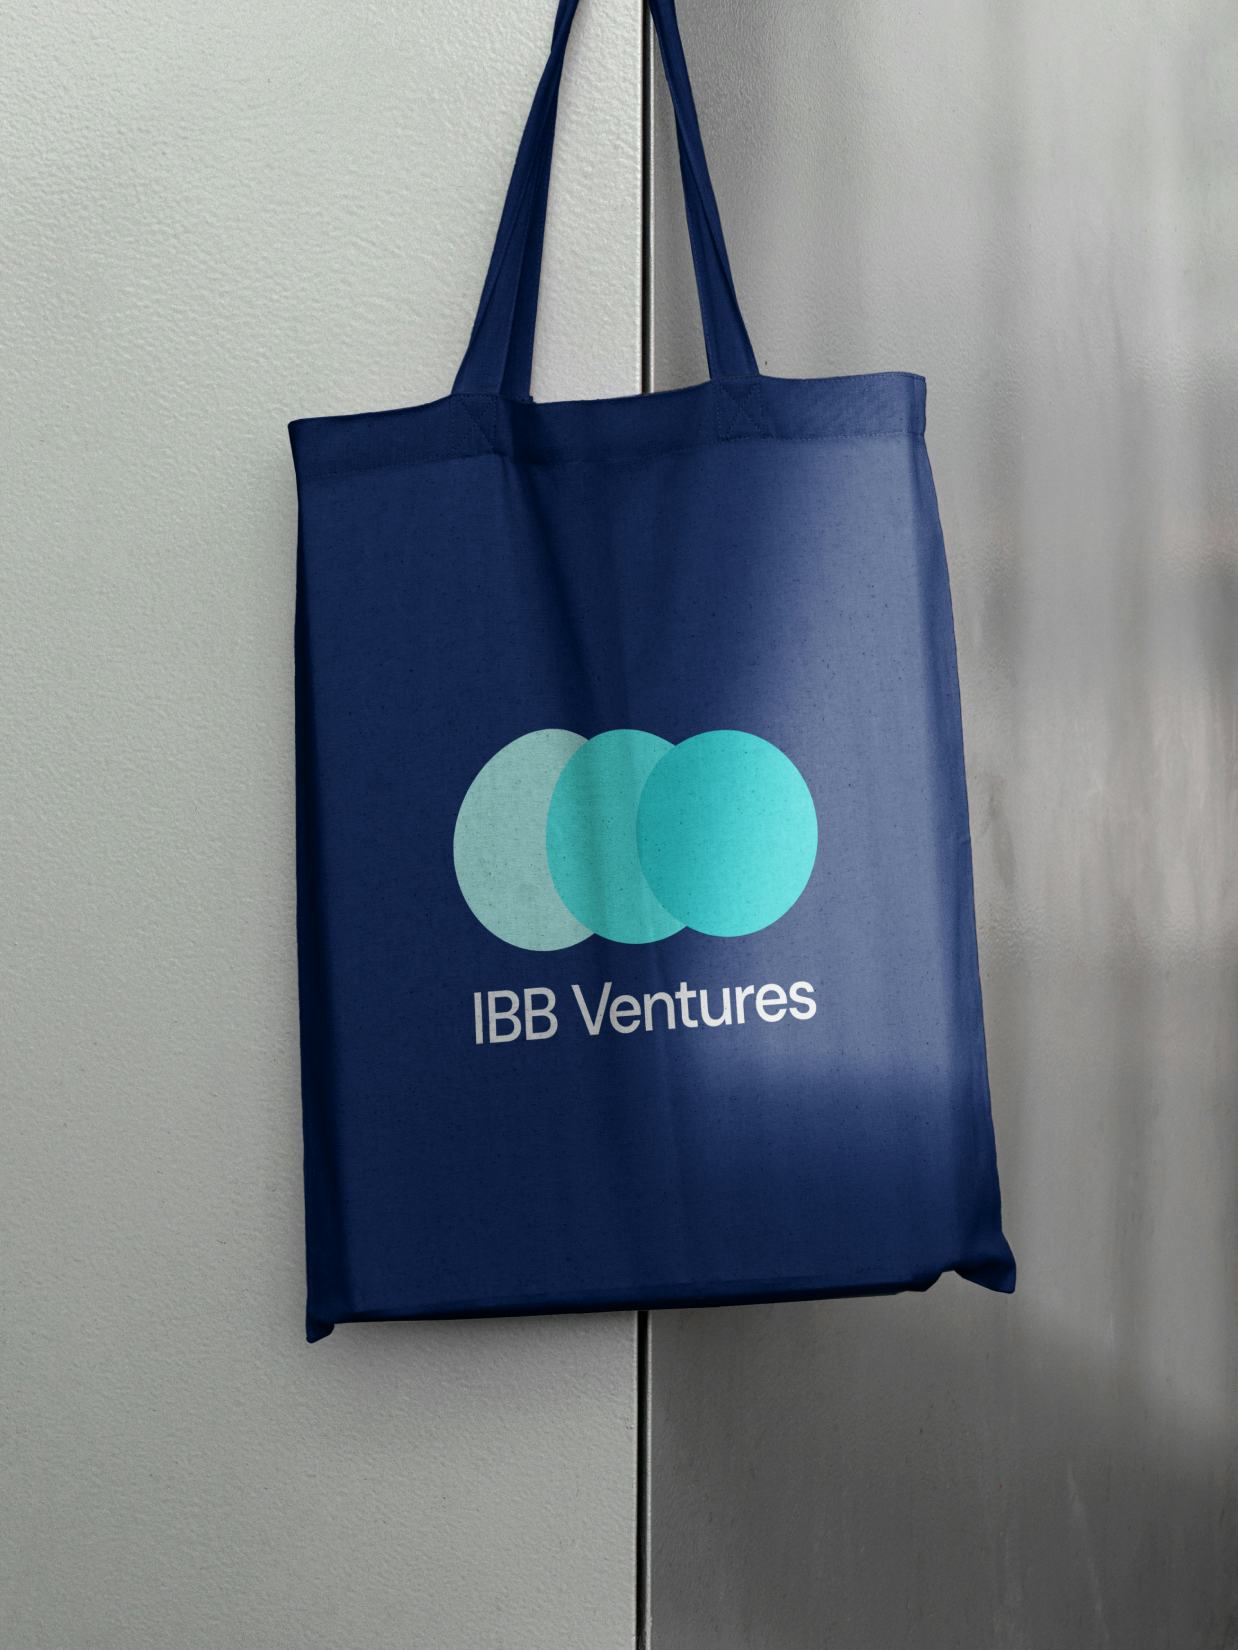 IBB Ventures - Rebranding Berlin's Start-up VC